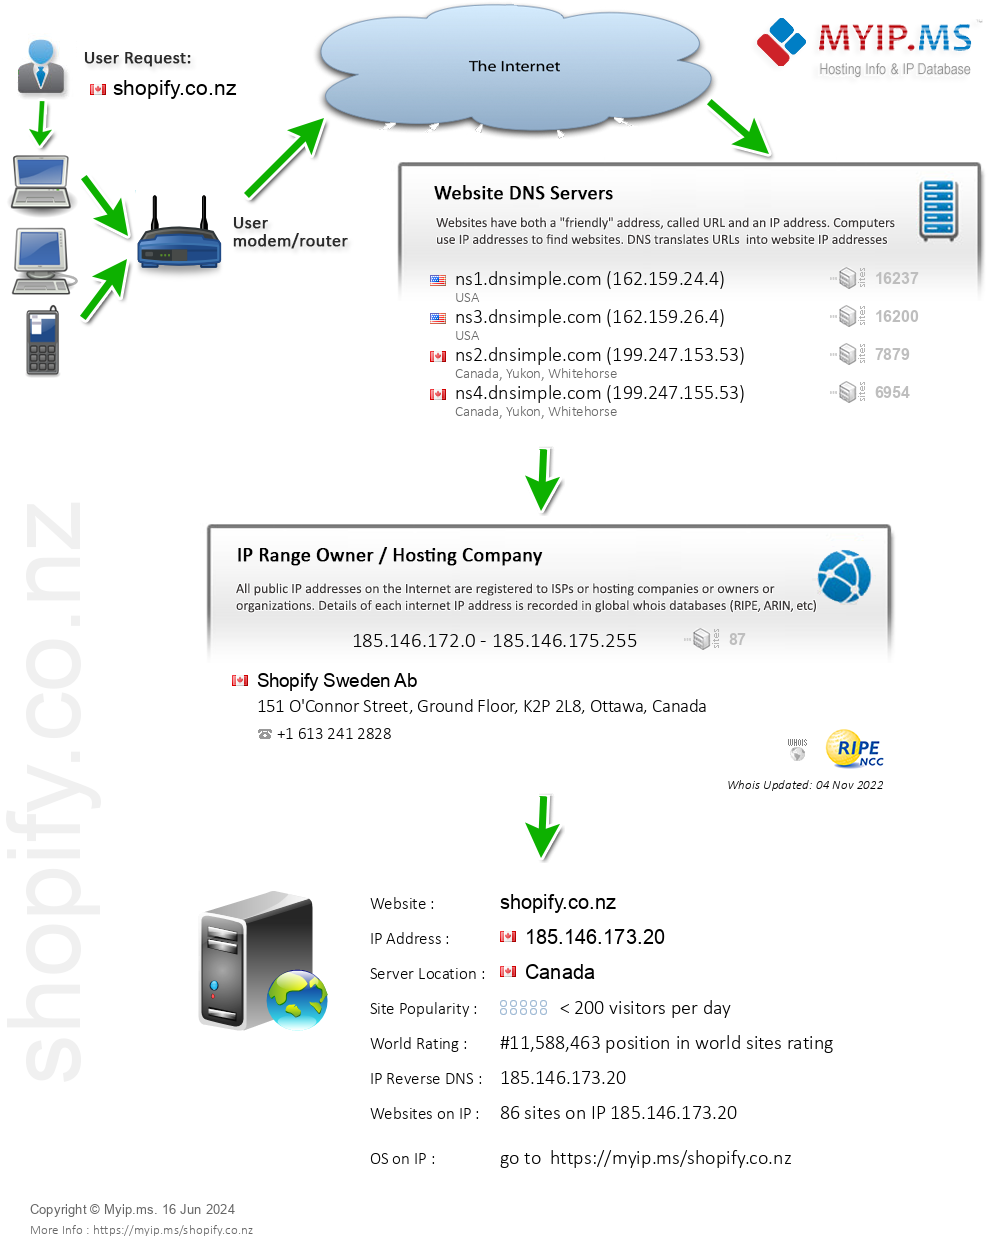 Shopify.co.nz - Website Hosting Visual IP Diagram